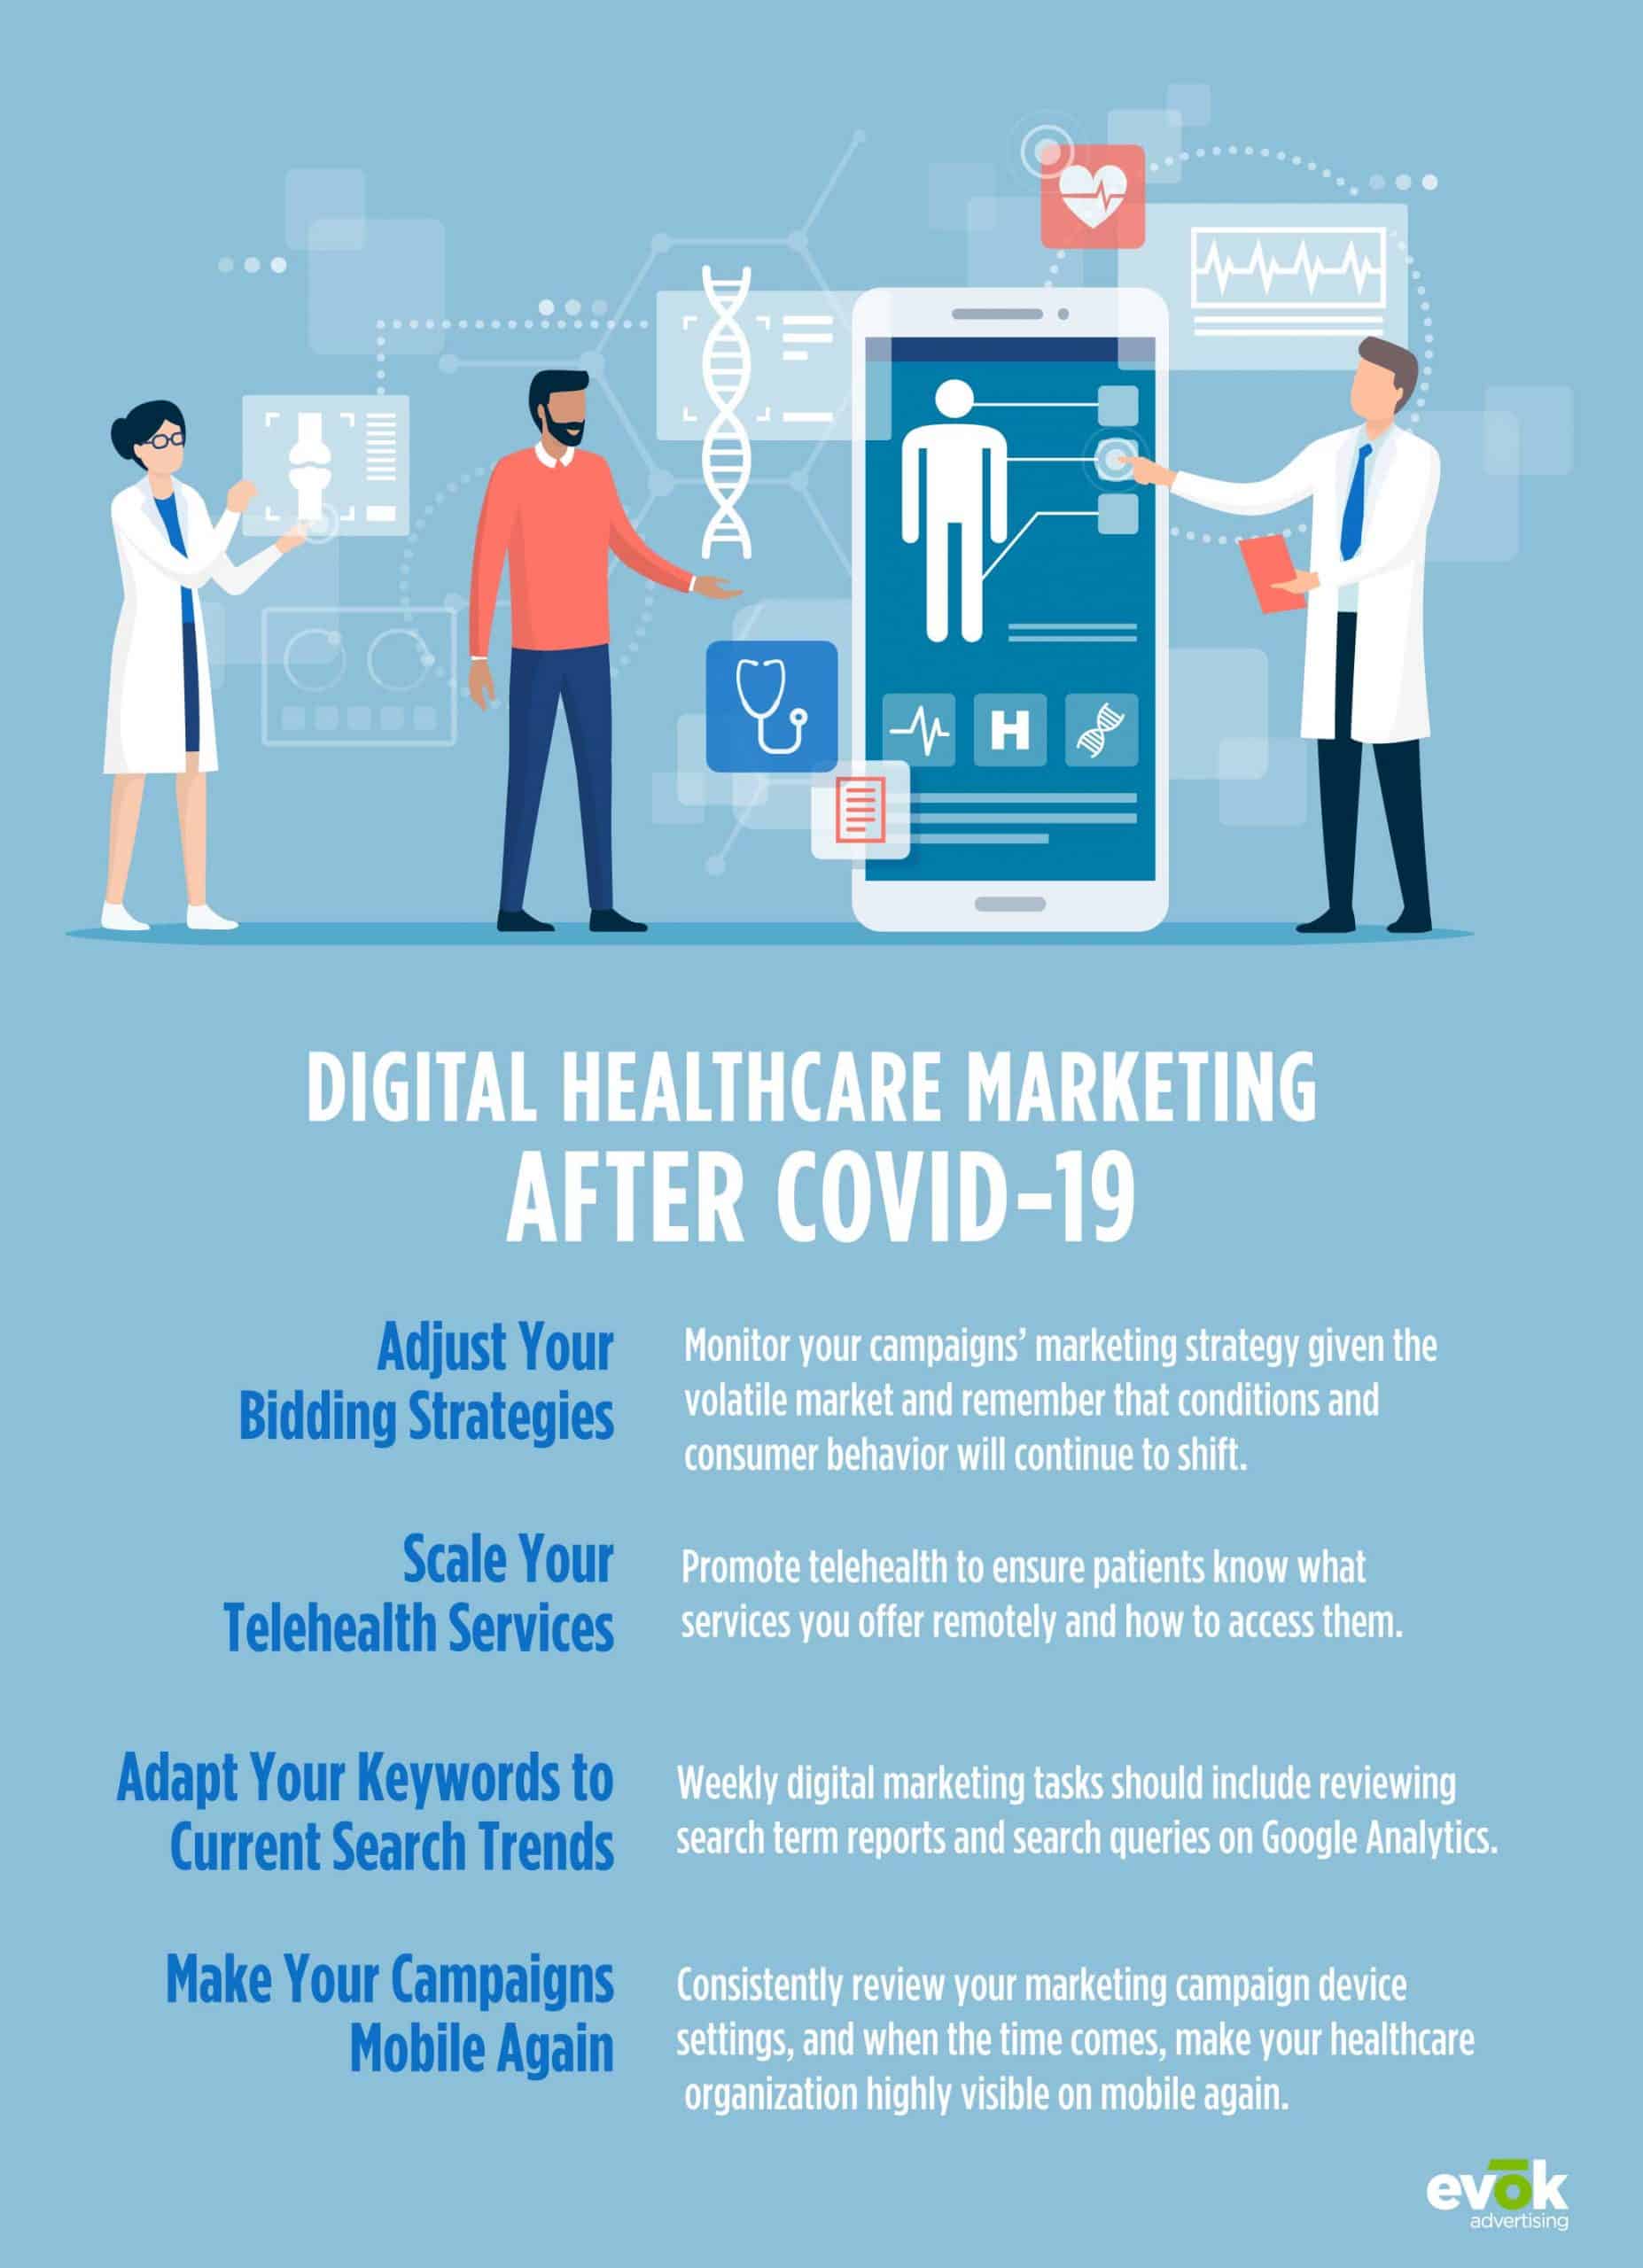 How do healthcare organizations use marketing